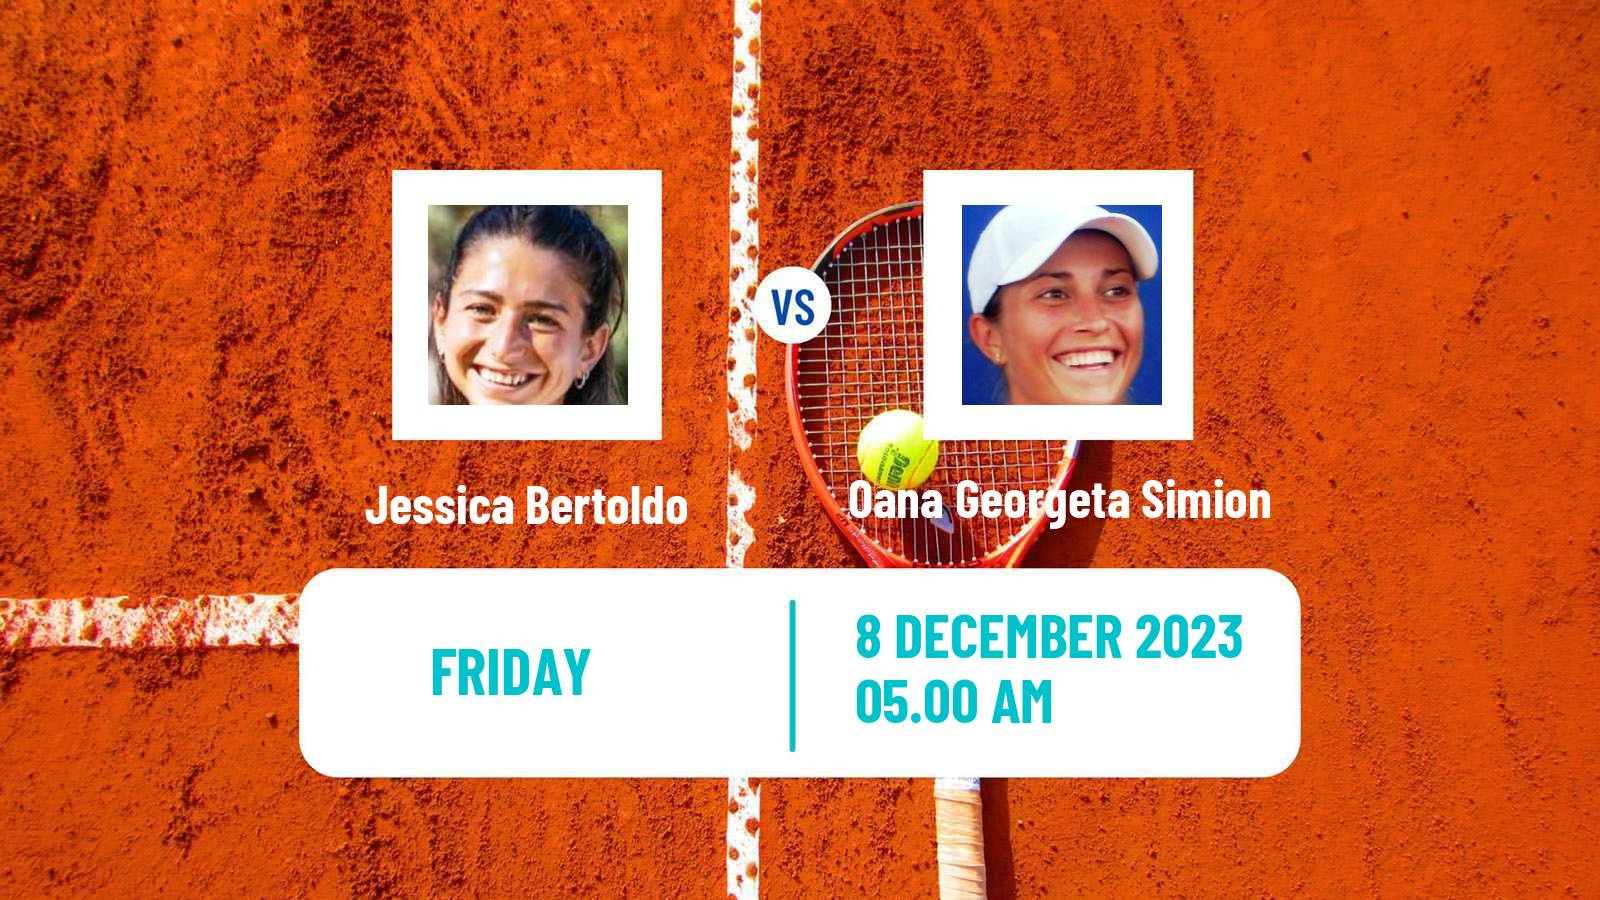 Tennis ITF W15 Valencia 2 Women Jessica Bertoldo - Oana Georgeta Simion